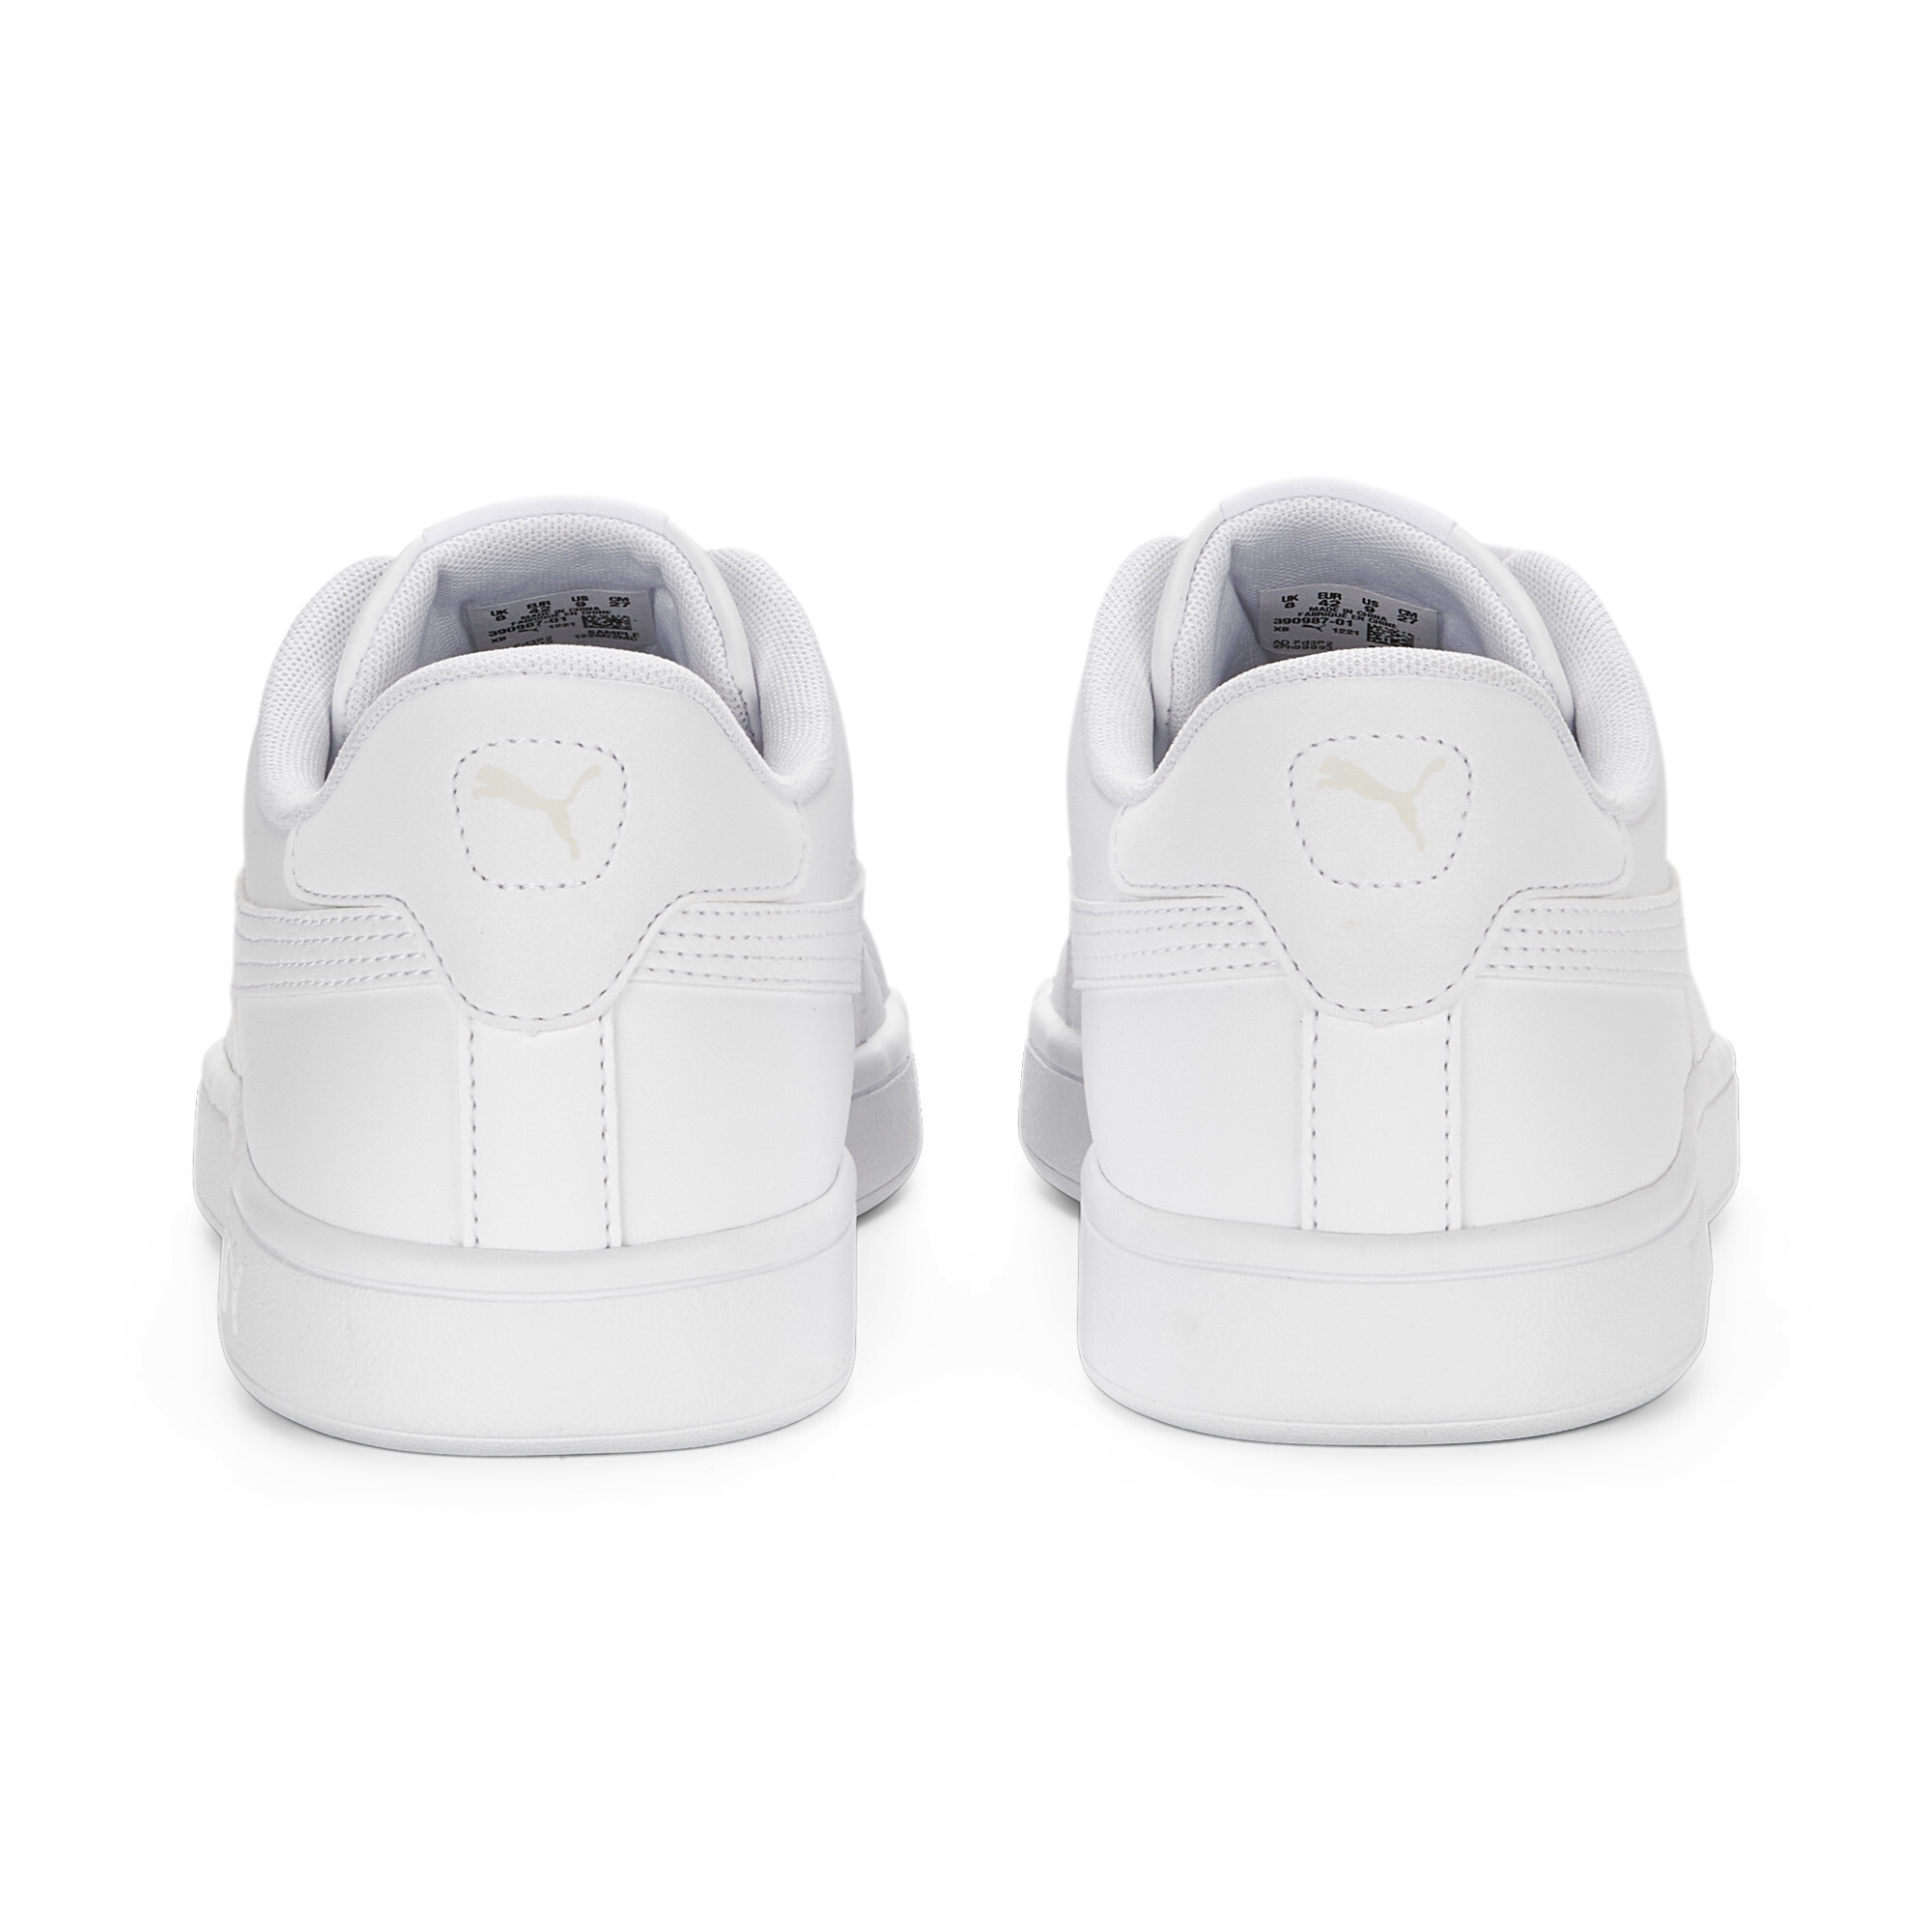 Puma Smash 3.0 L Sneakers, White, Size 39, Shoes